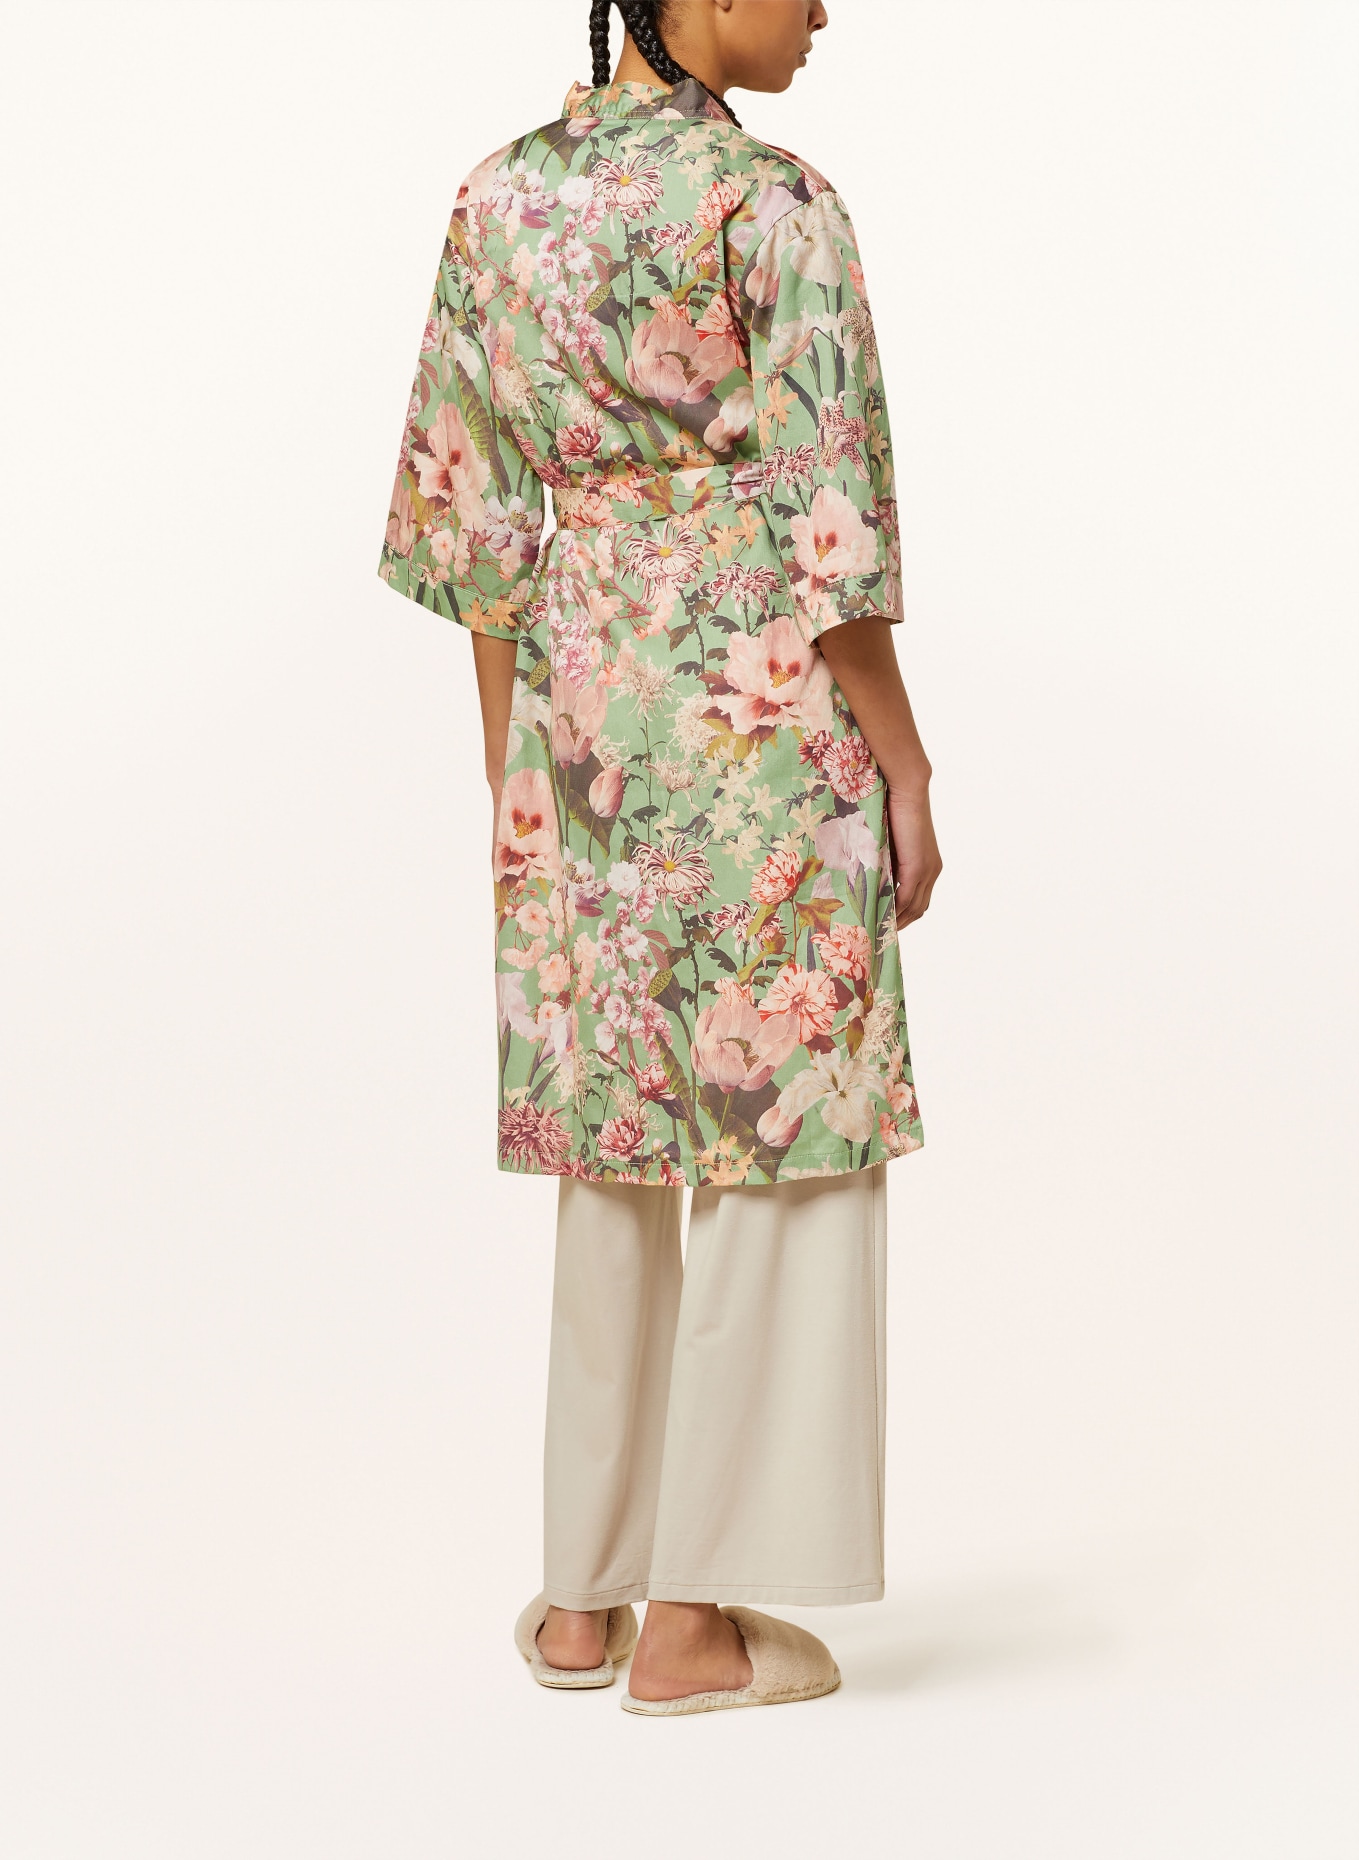 ESSENZA Damen-Kimono SARAI NOLESTE, Farbe: HELLGRÜN/ LACHS/ GRÜN (Bild 3)